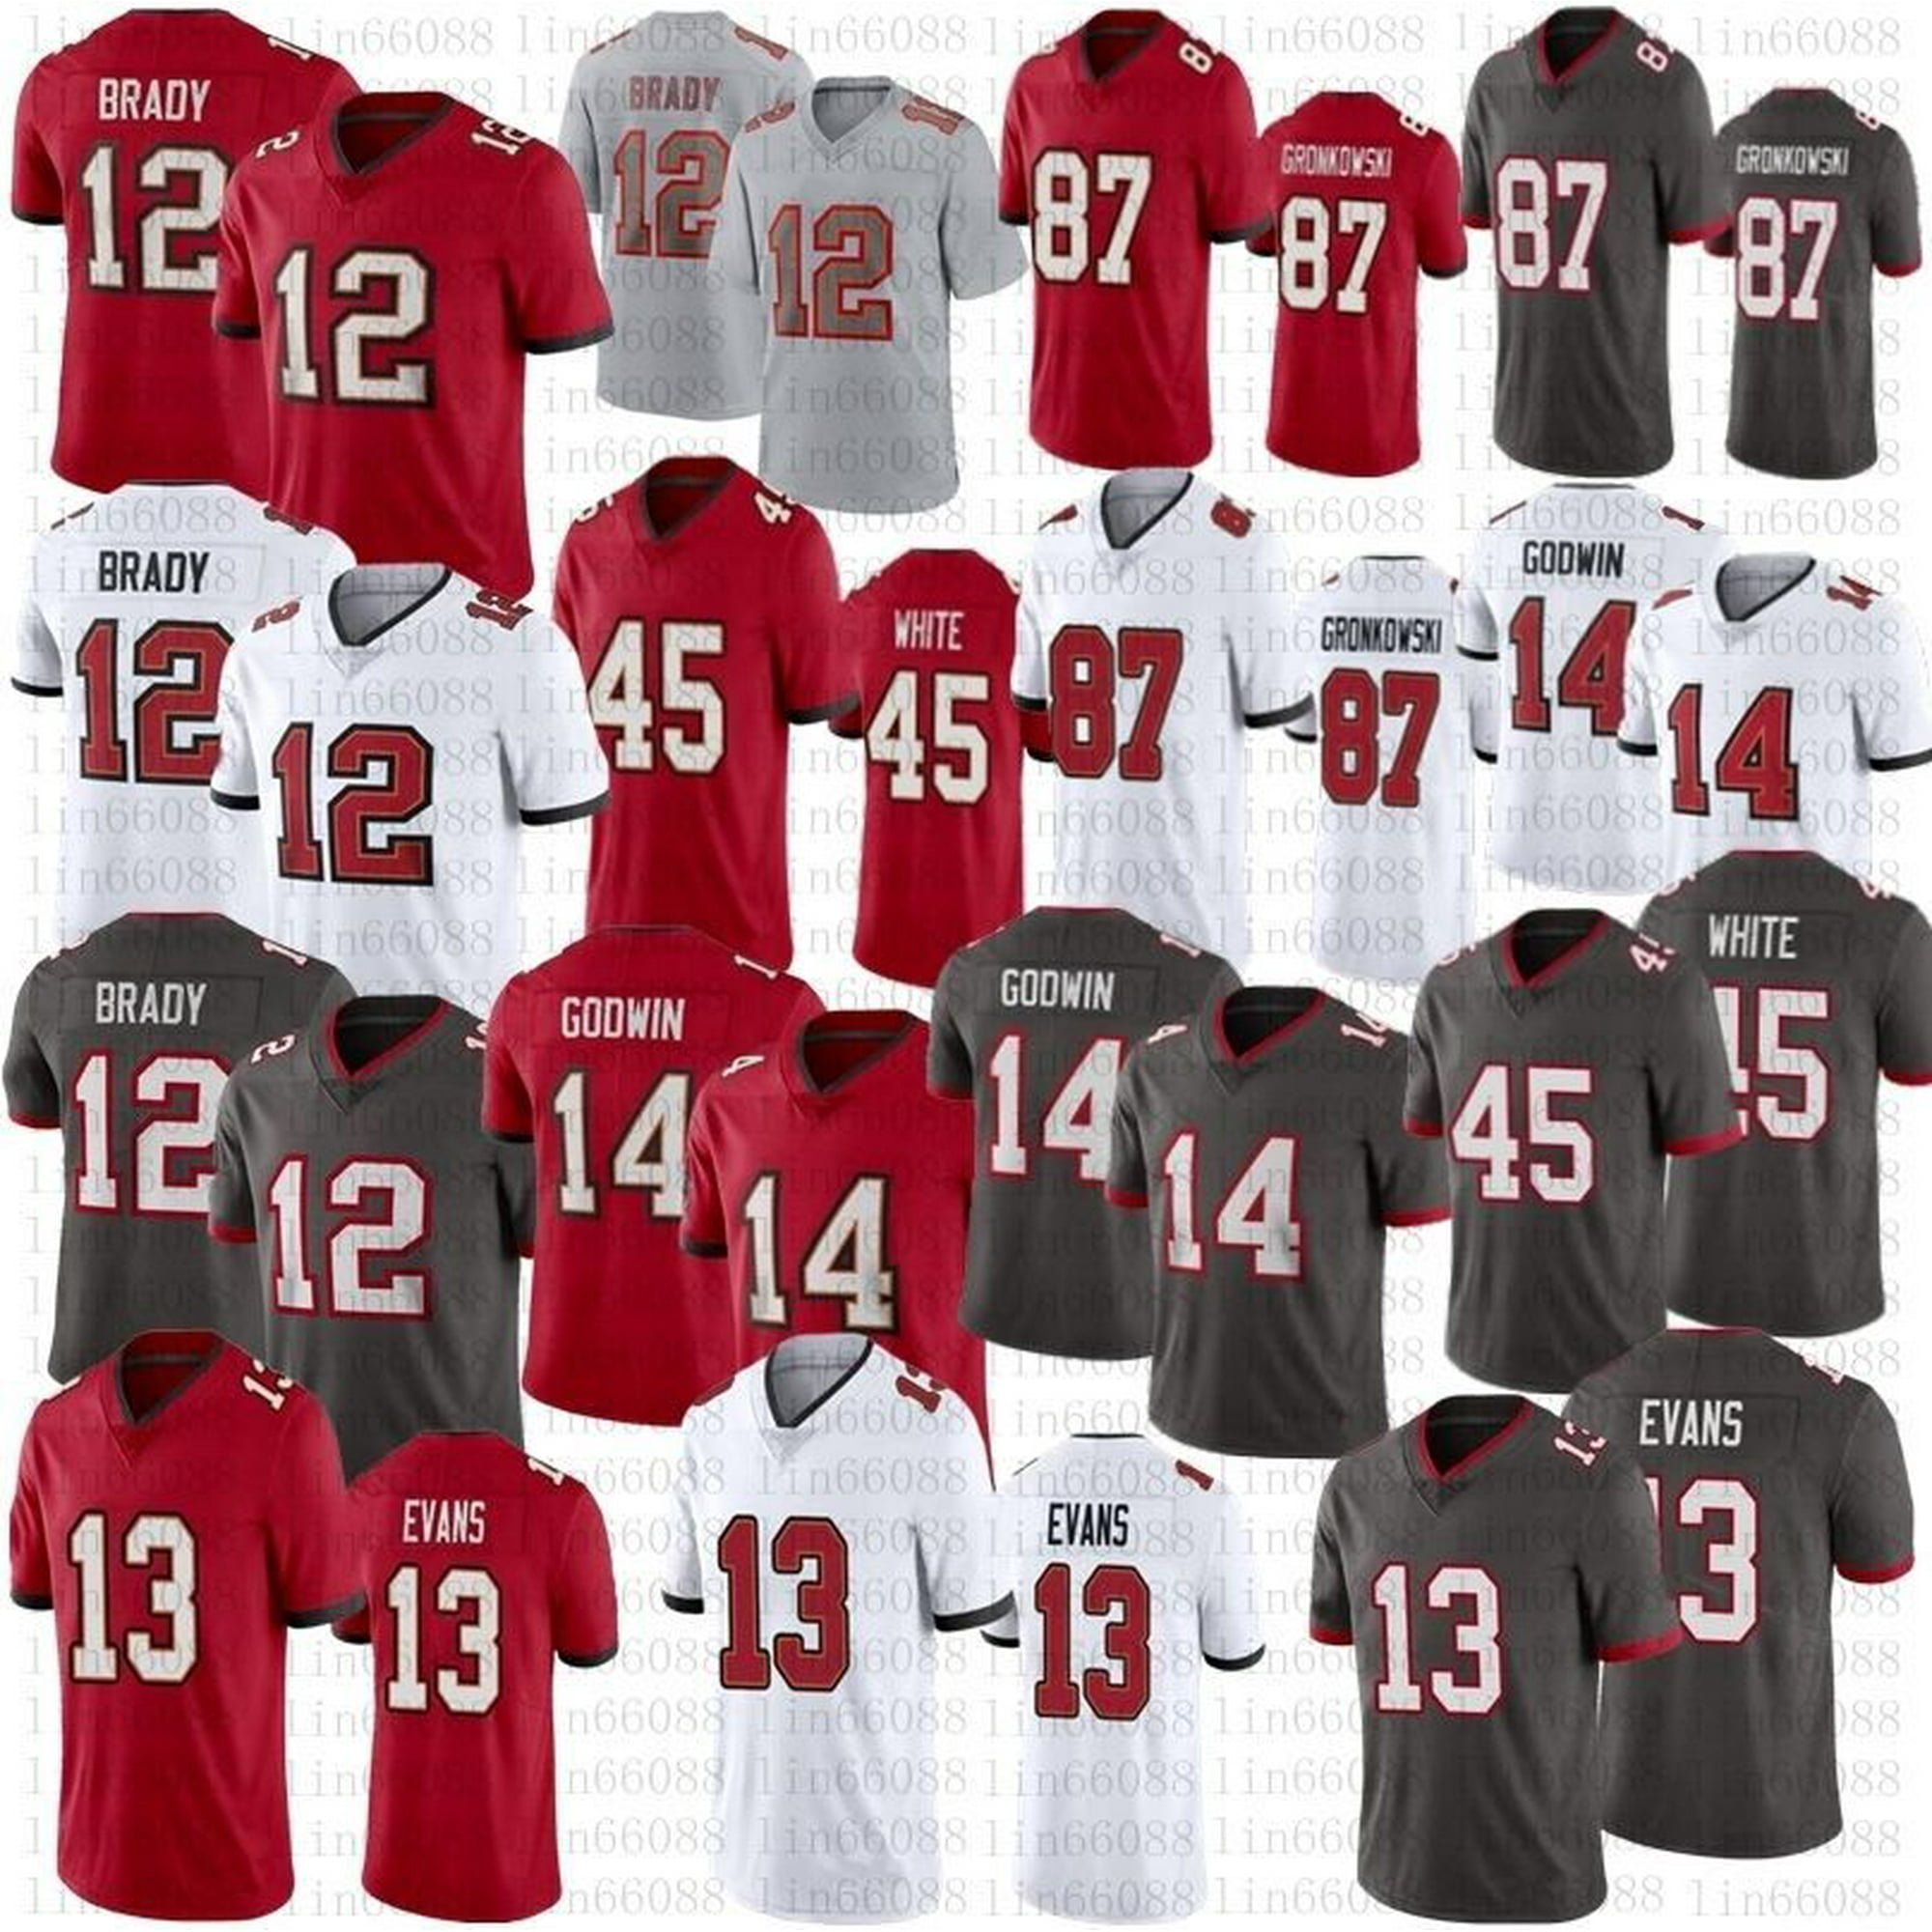 Washington Football Team Merchandise & Gifts - SportsUnlimited.com